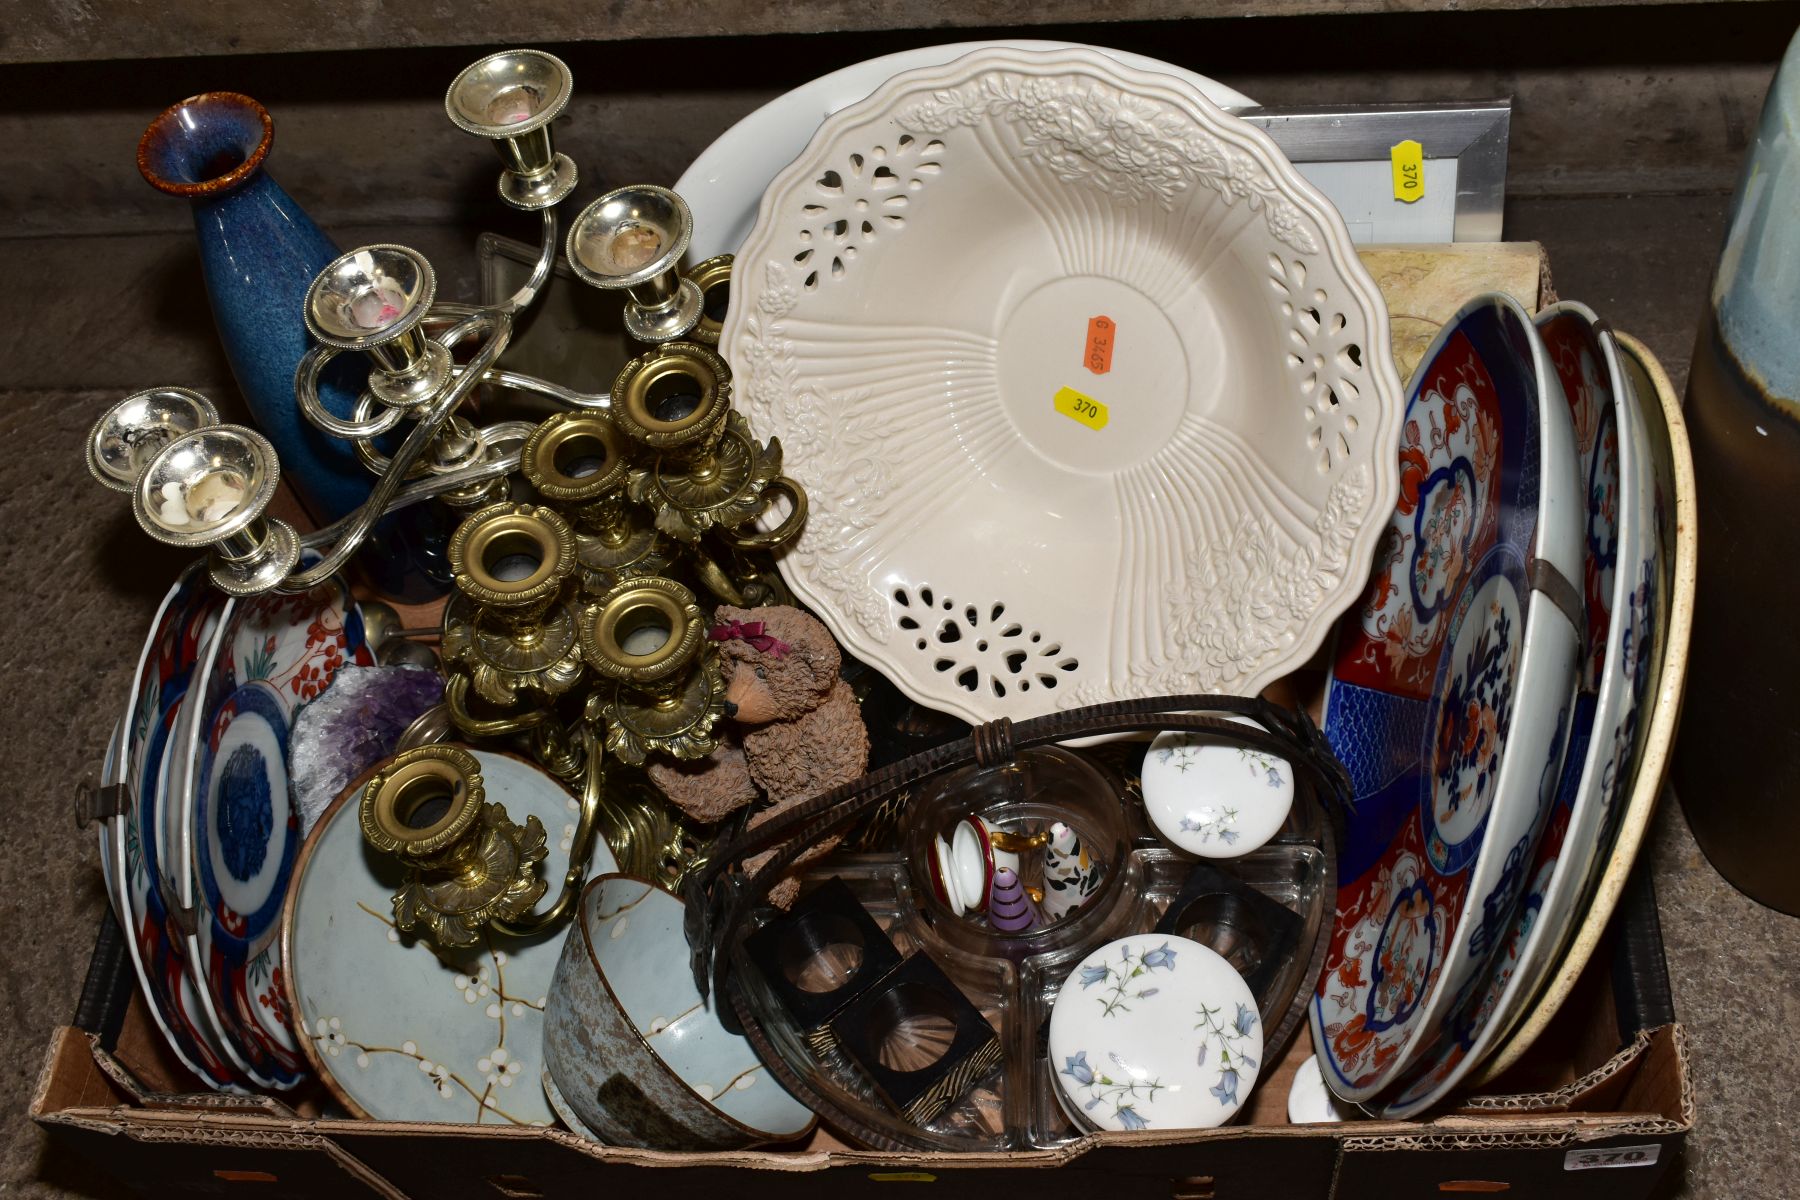 THREE BOXES, A BASKET AND LOOSE CERAMICS, GLASSWARE, KITCHENALIA, METALWARE, including a Webb - Bild 3 aus 6